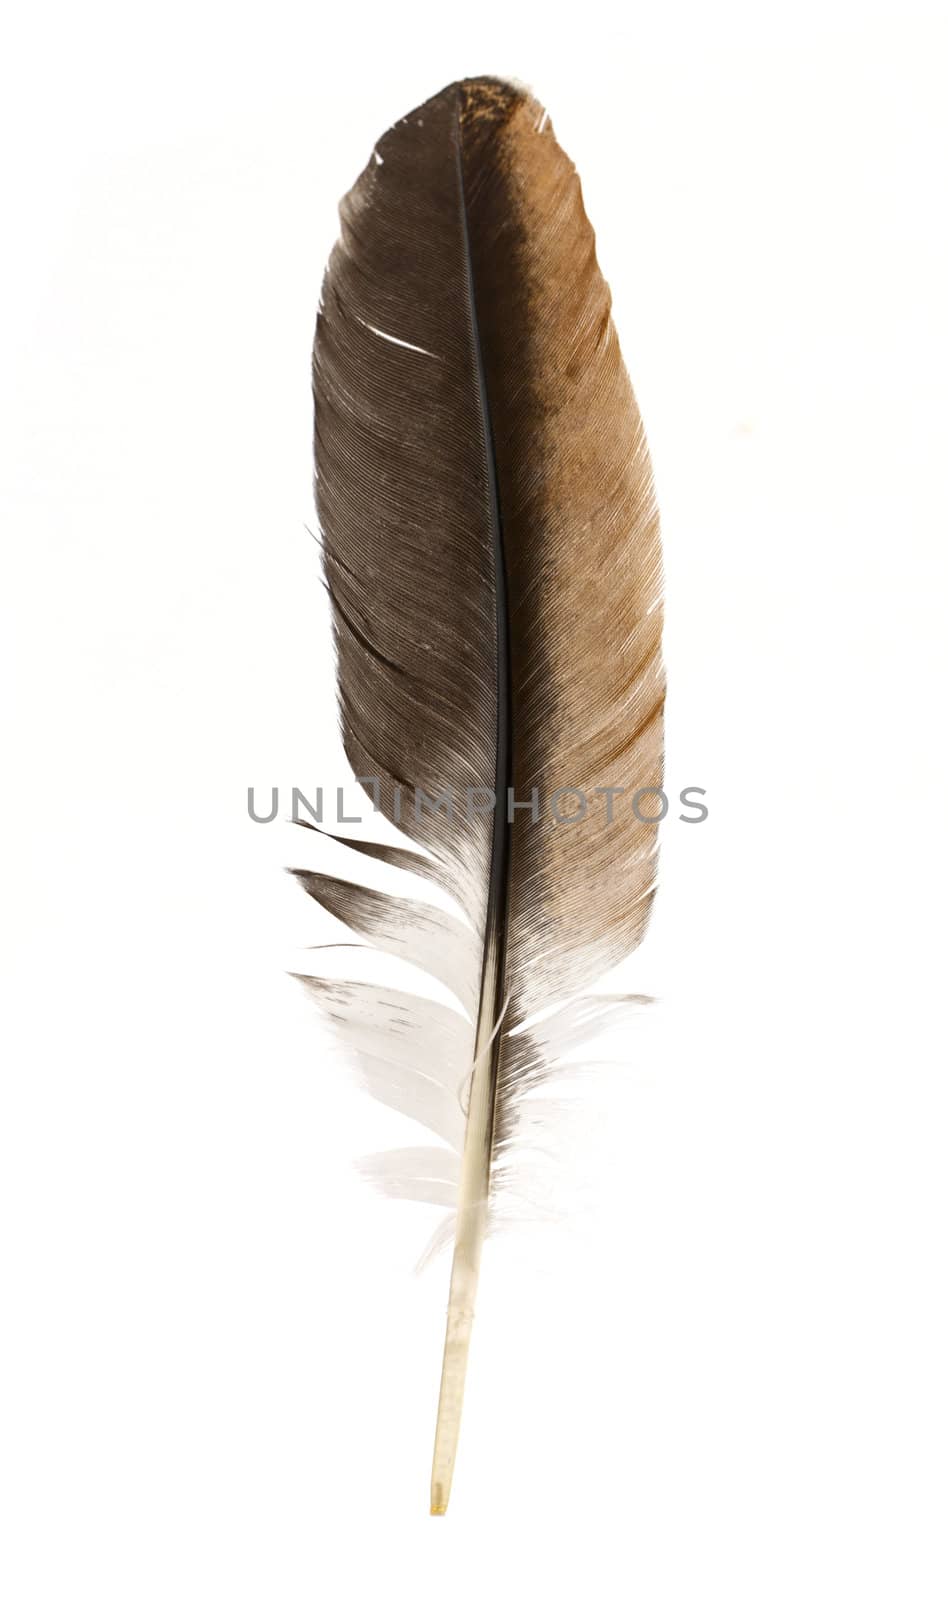 Black feather by vtorous